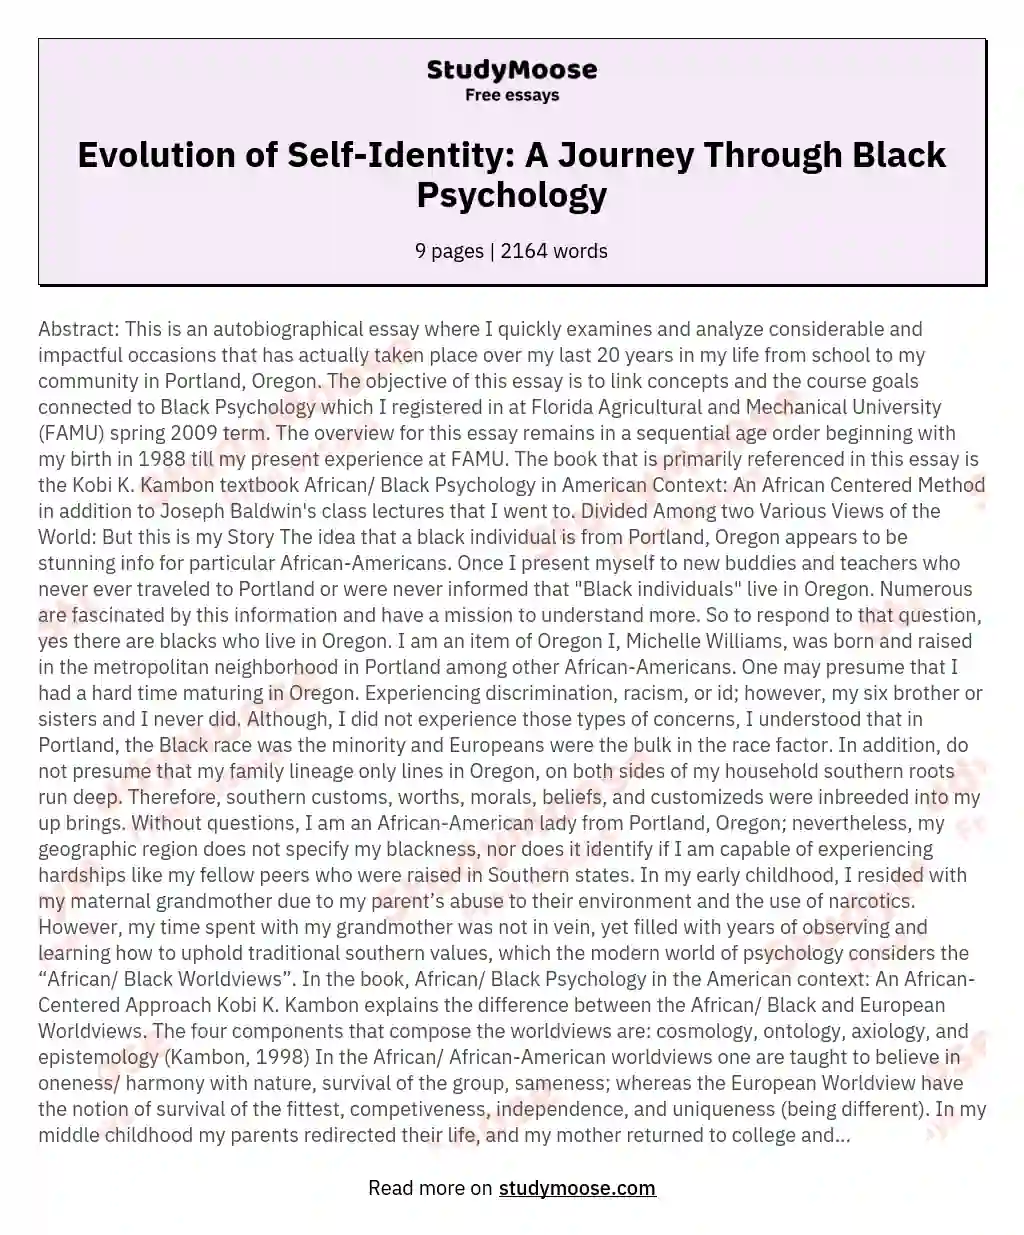 Evolution of Self-Identity: A Journey Through Black Psychology essay